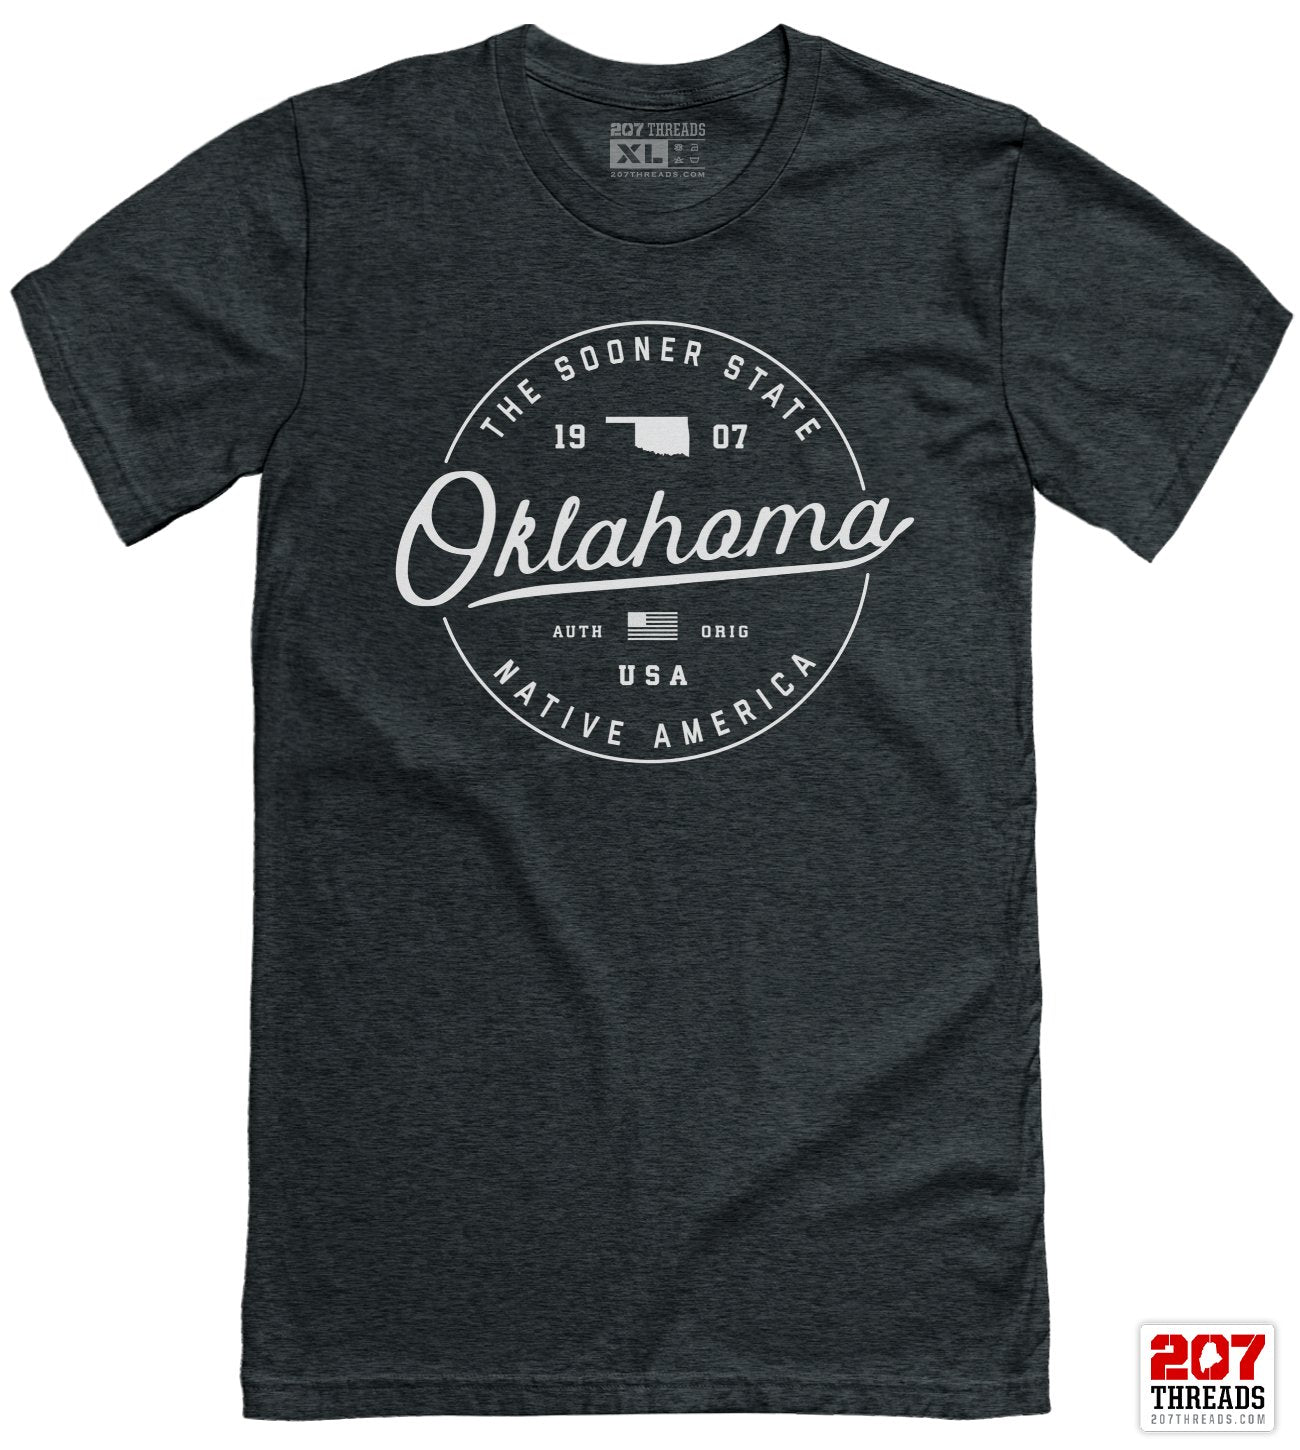 State of Oklahoma T-Shirt - Soft Oklahoma Vacation Tee